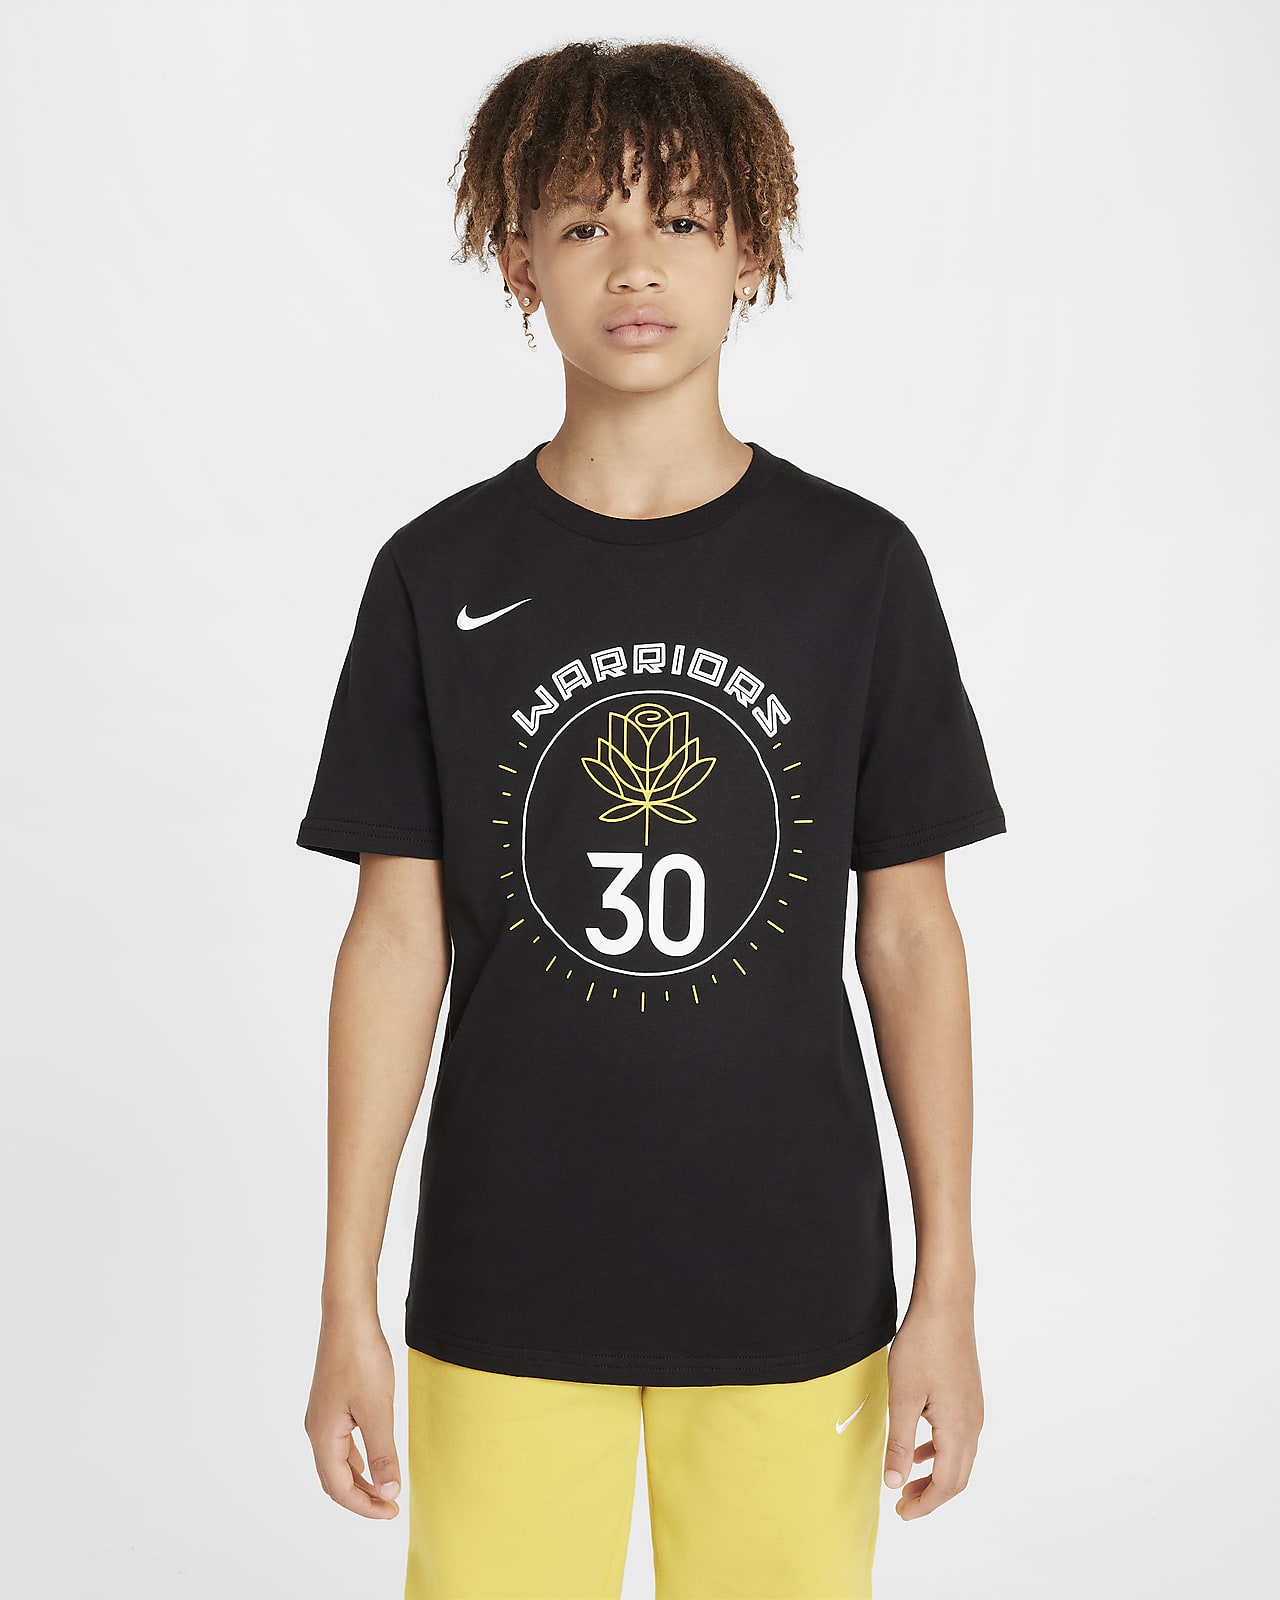 Golden State Warriors City Edition Nike NBA-T-Shirt für ältere Kinder